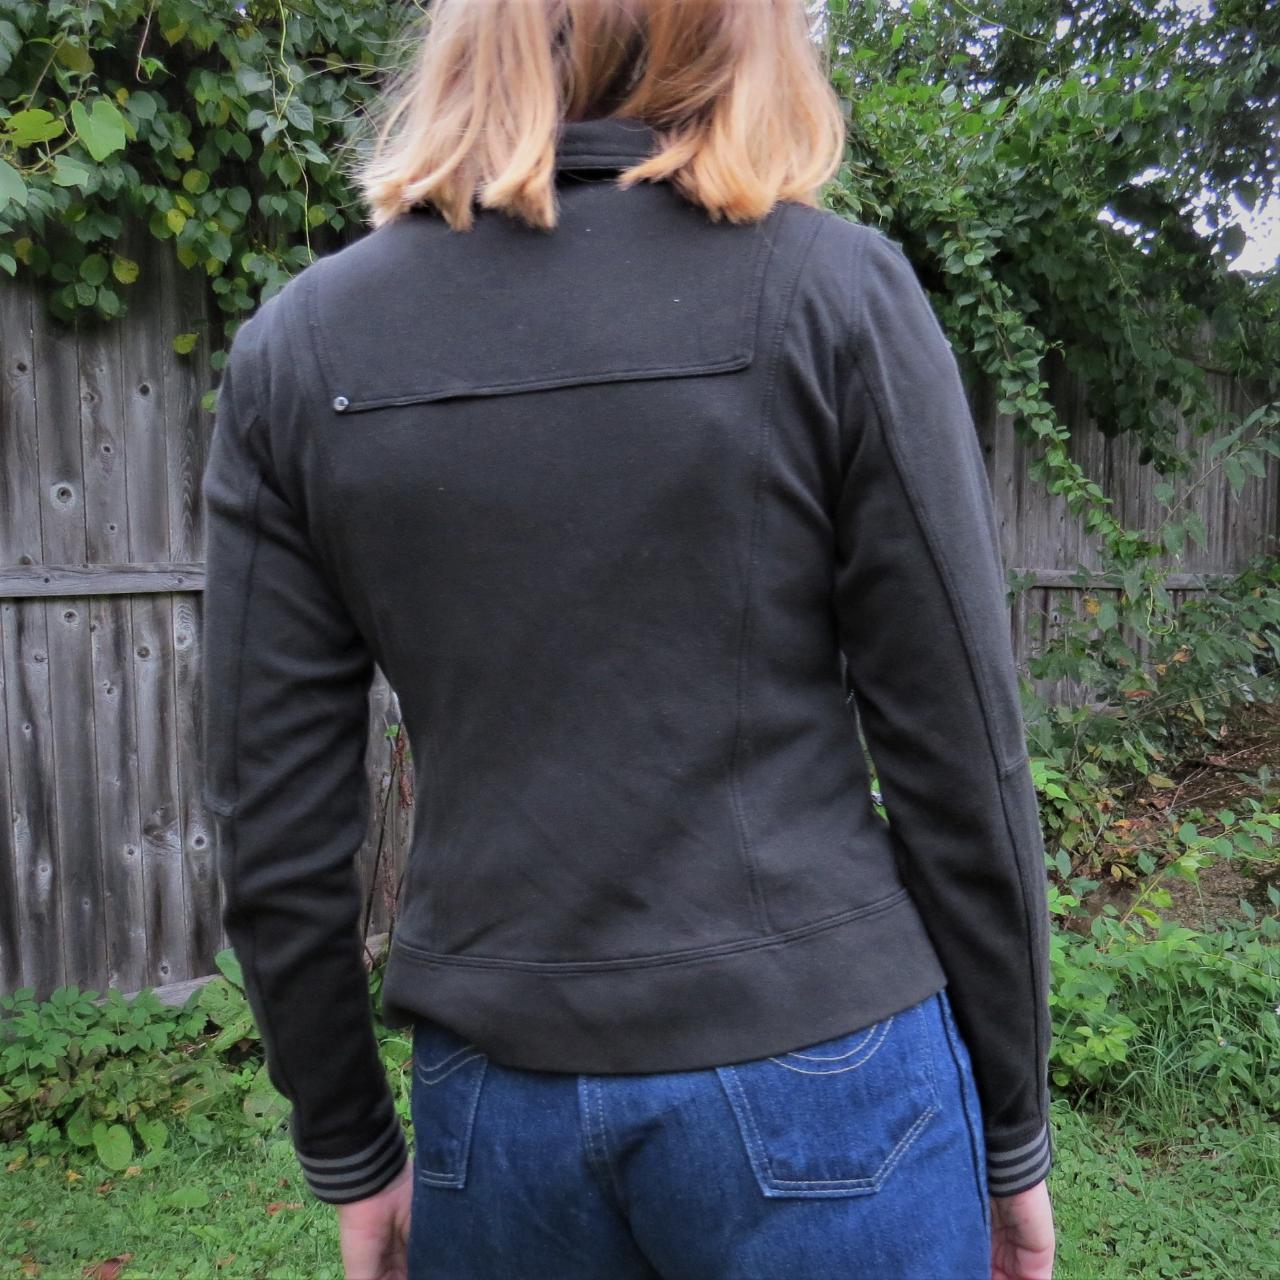 Product Image 3 - Lole moto sweatshirt

Size S

Be cool